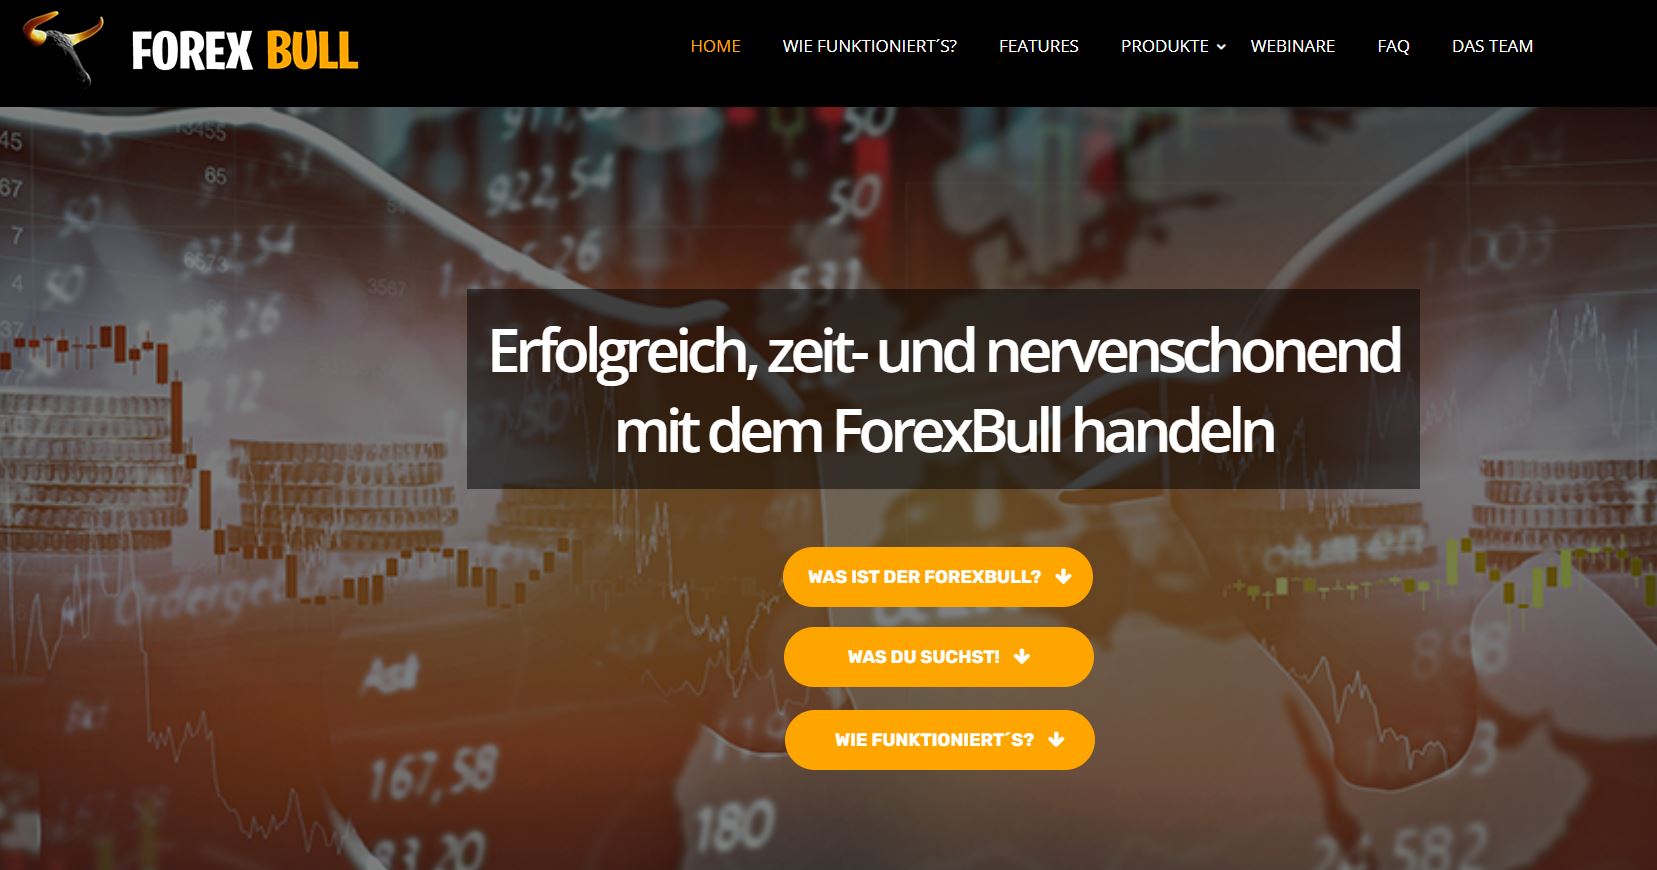 Morning-Briefing-ForexBull-Ruhiger-Wochenauftakt-Chartanalyse-JFD-Bank-GodmodeTrader.de-4